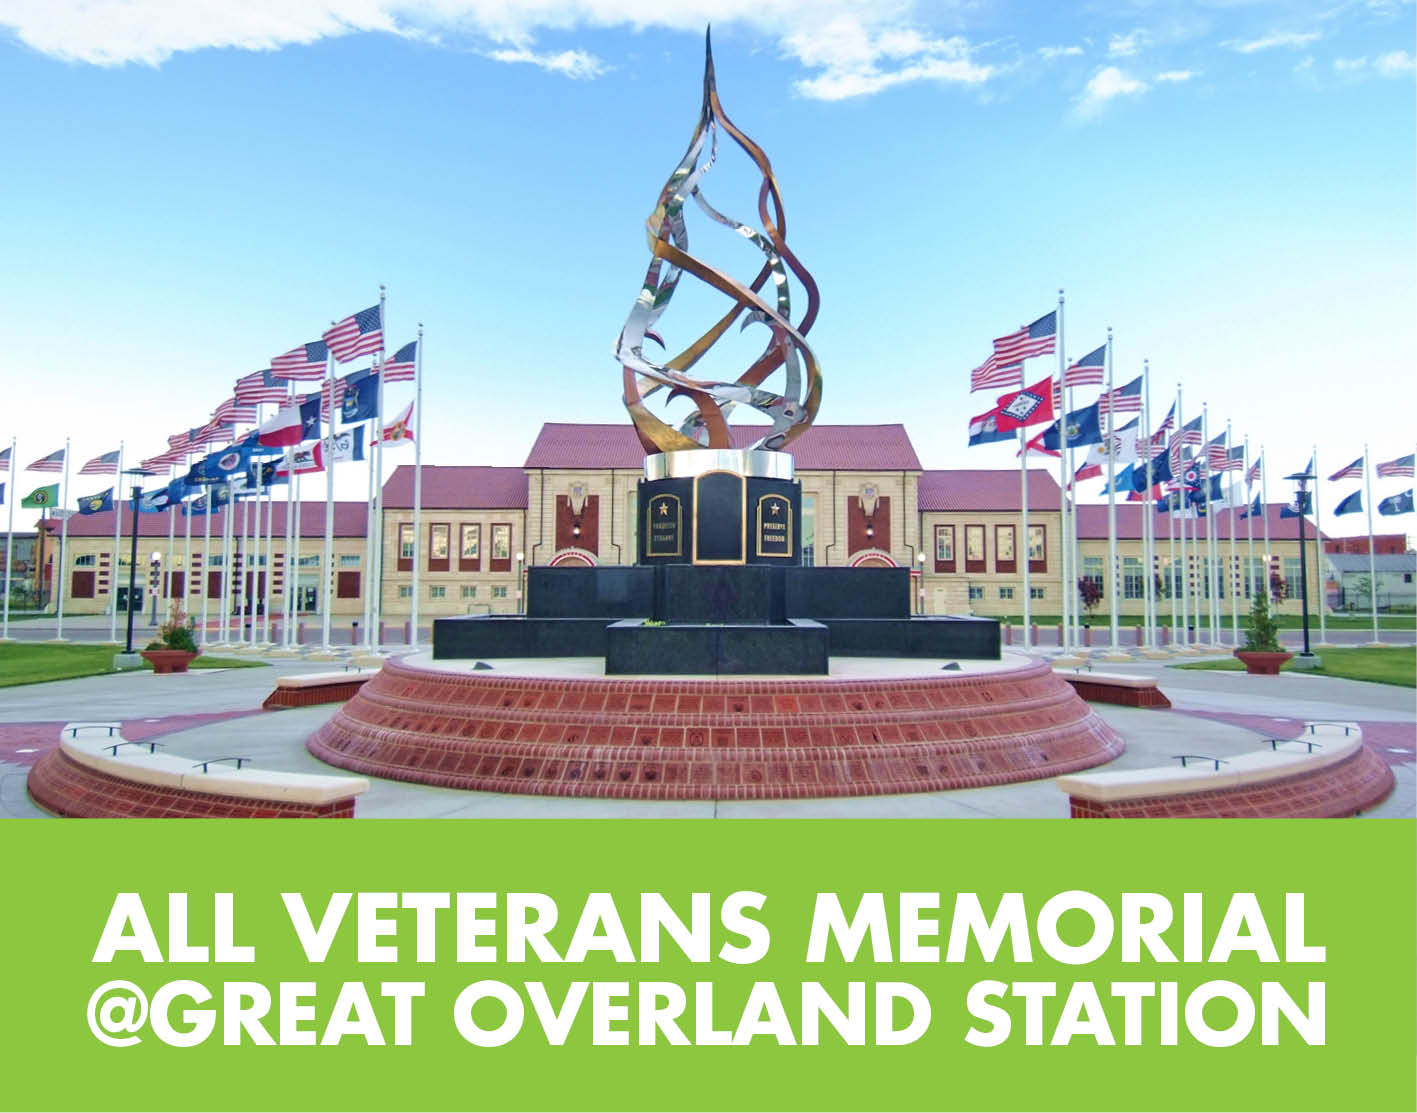 All veterans memorial tile